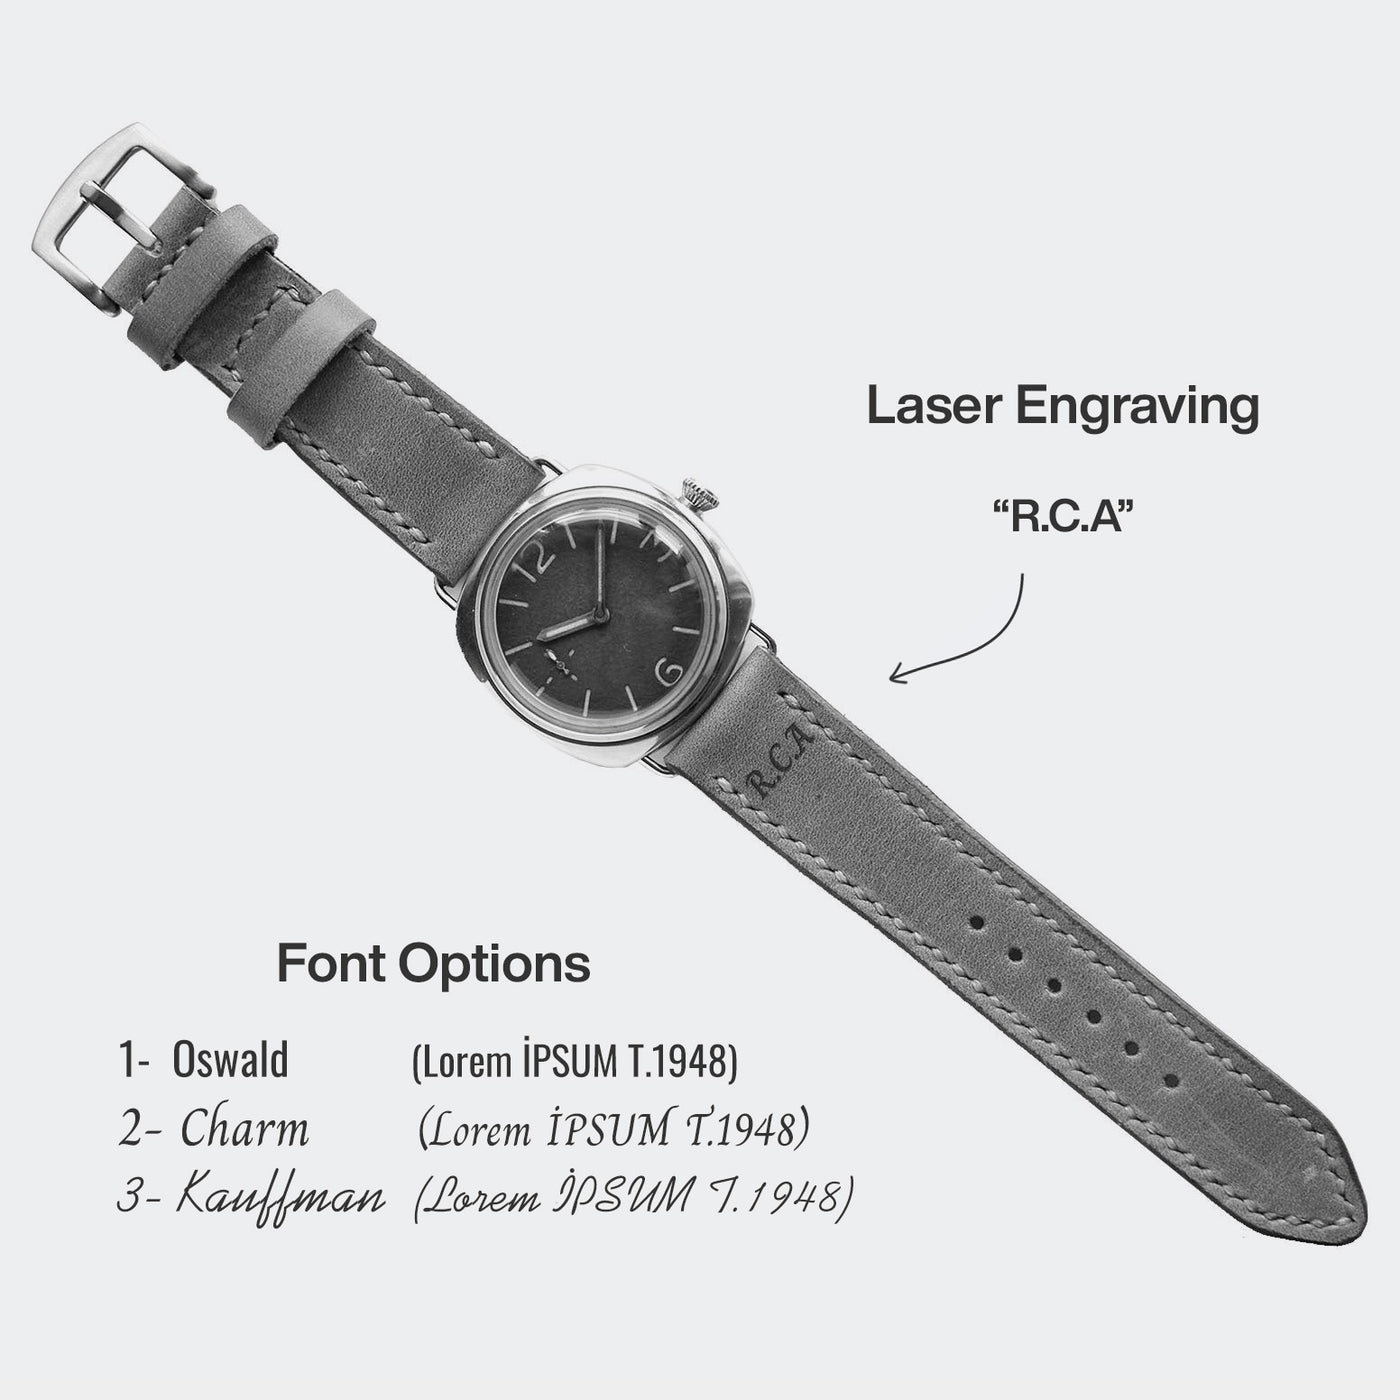 Custom Made VegTan Leather Watch Strap - Purple